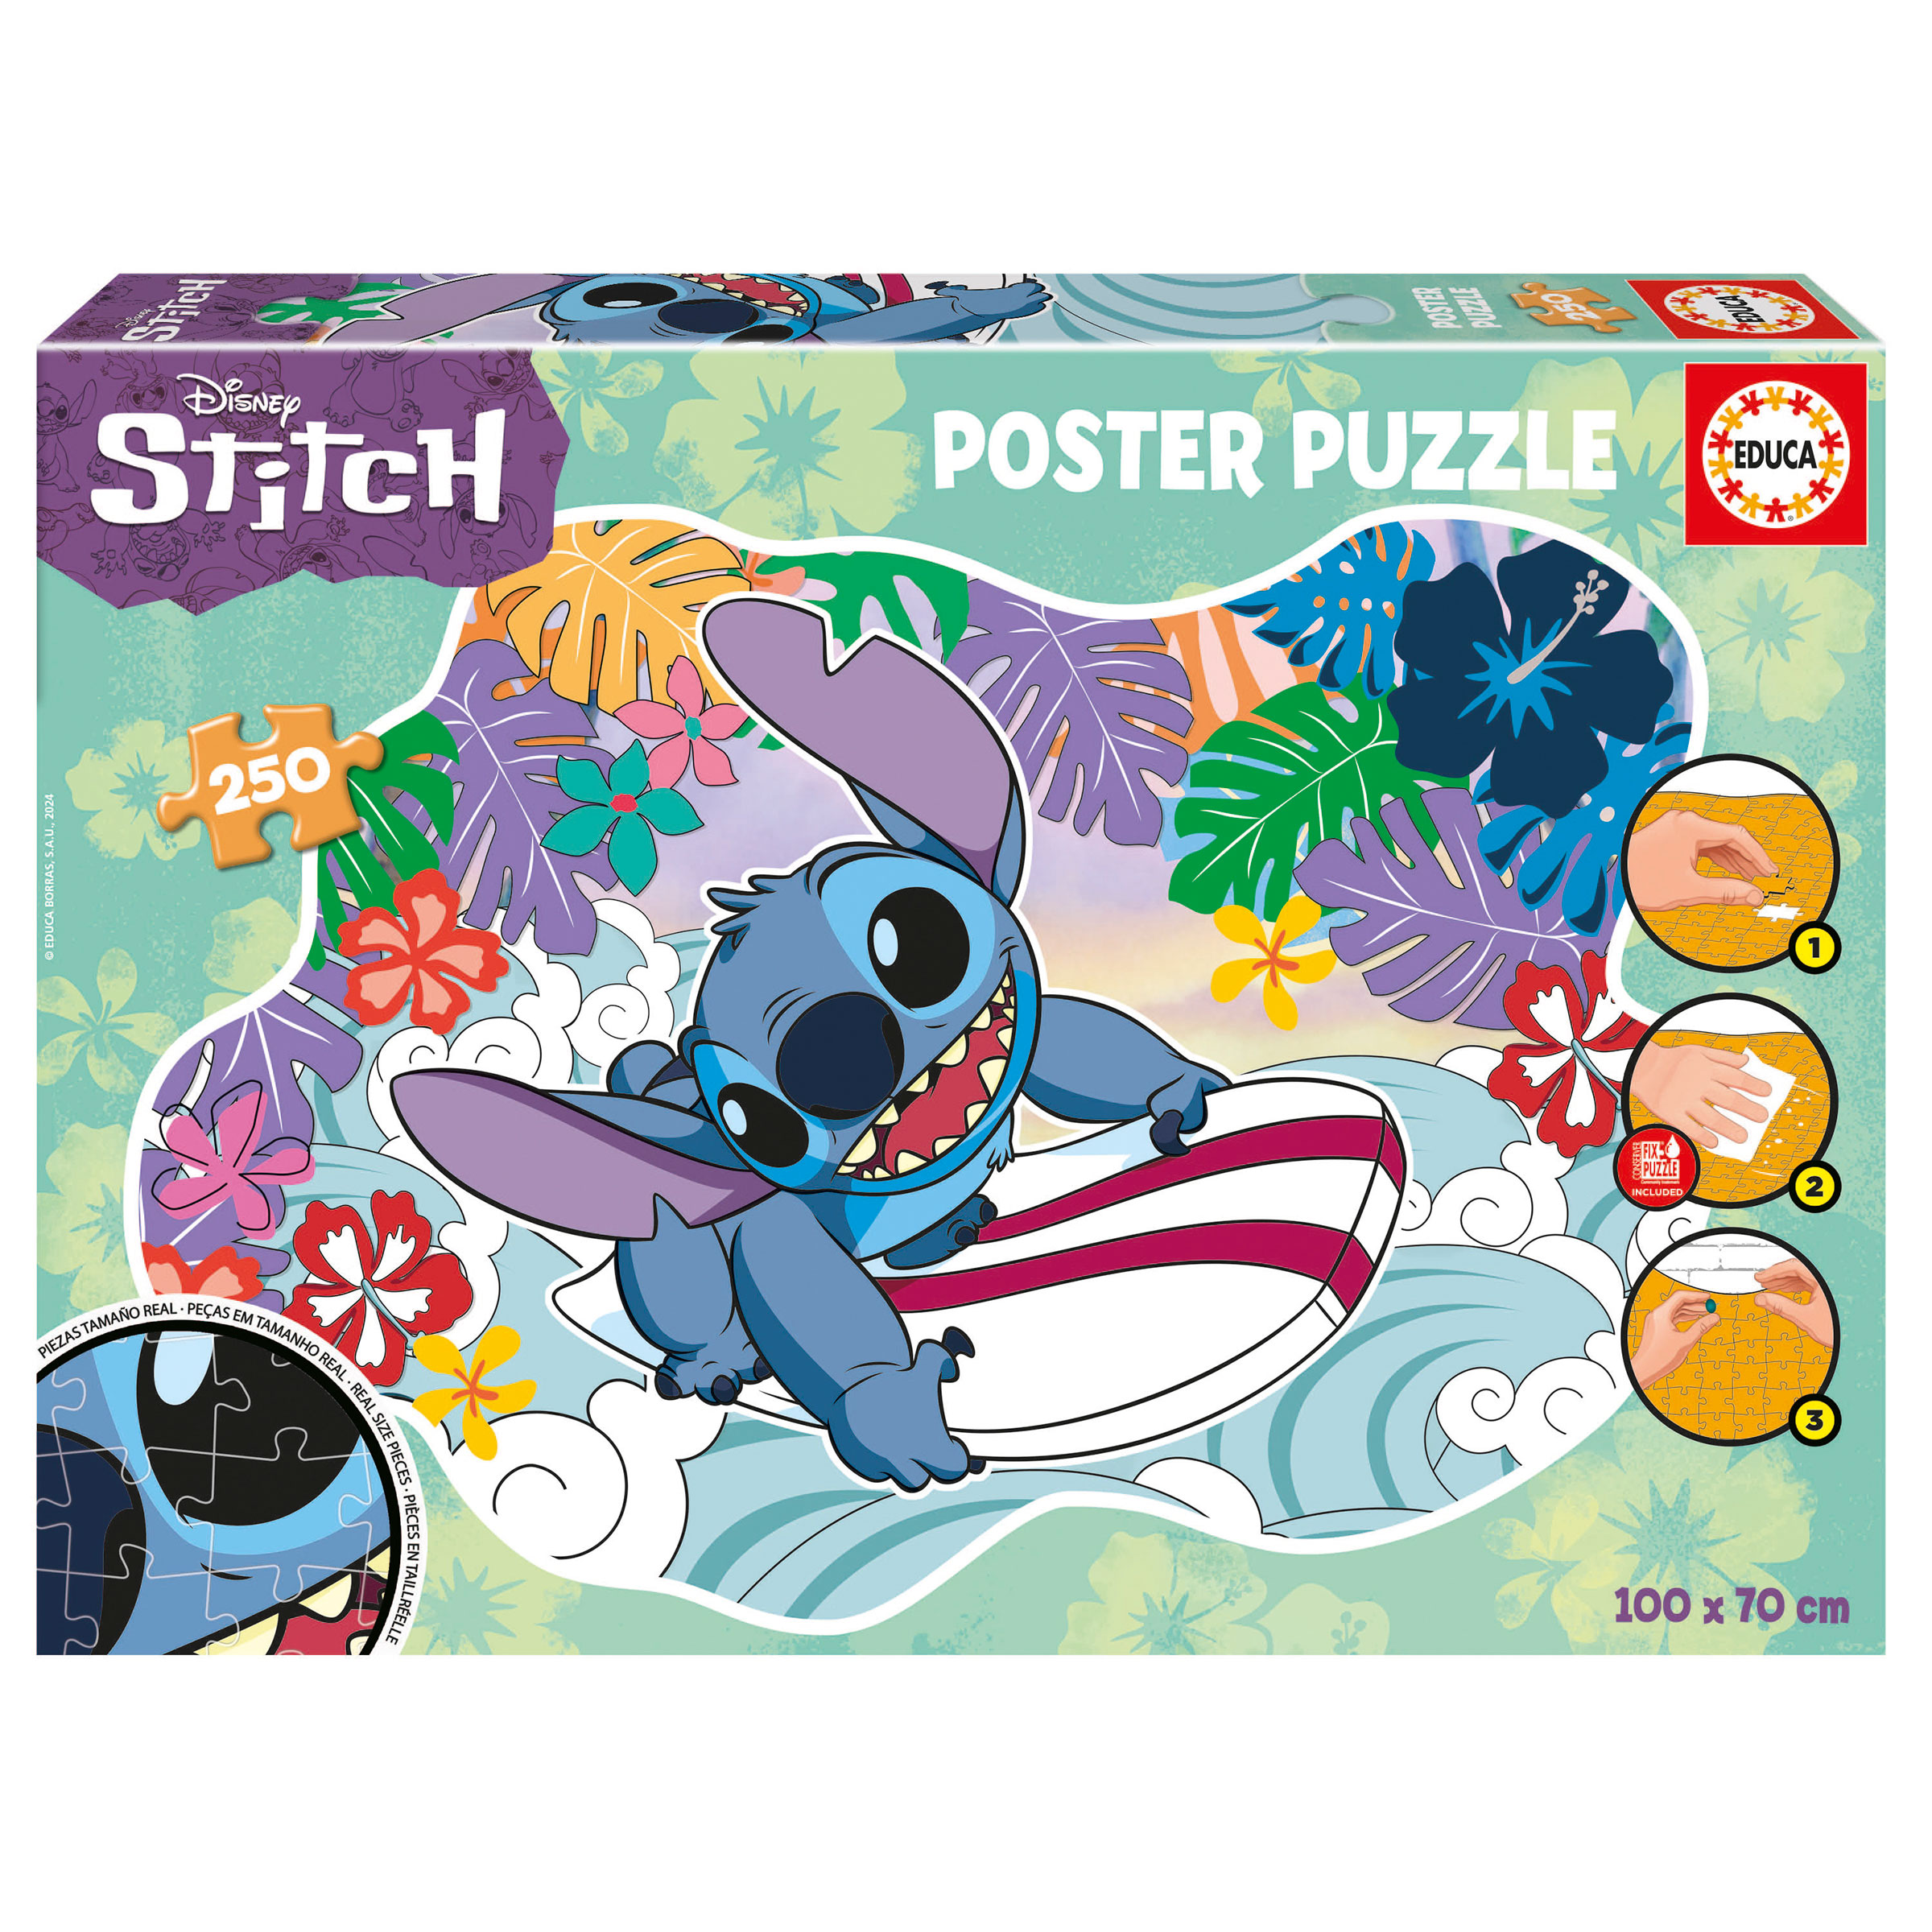 250 Poster Puzzle Stitch